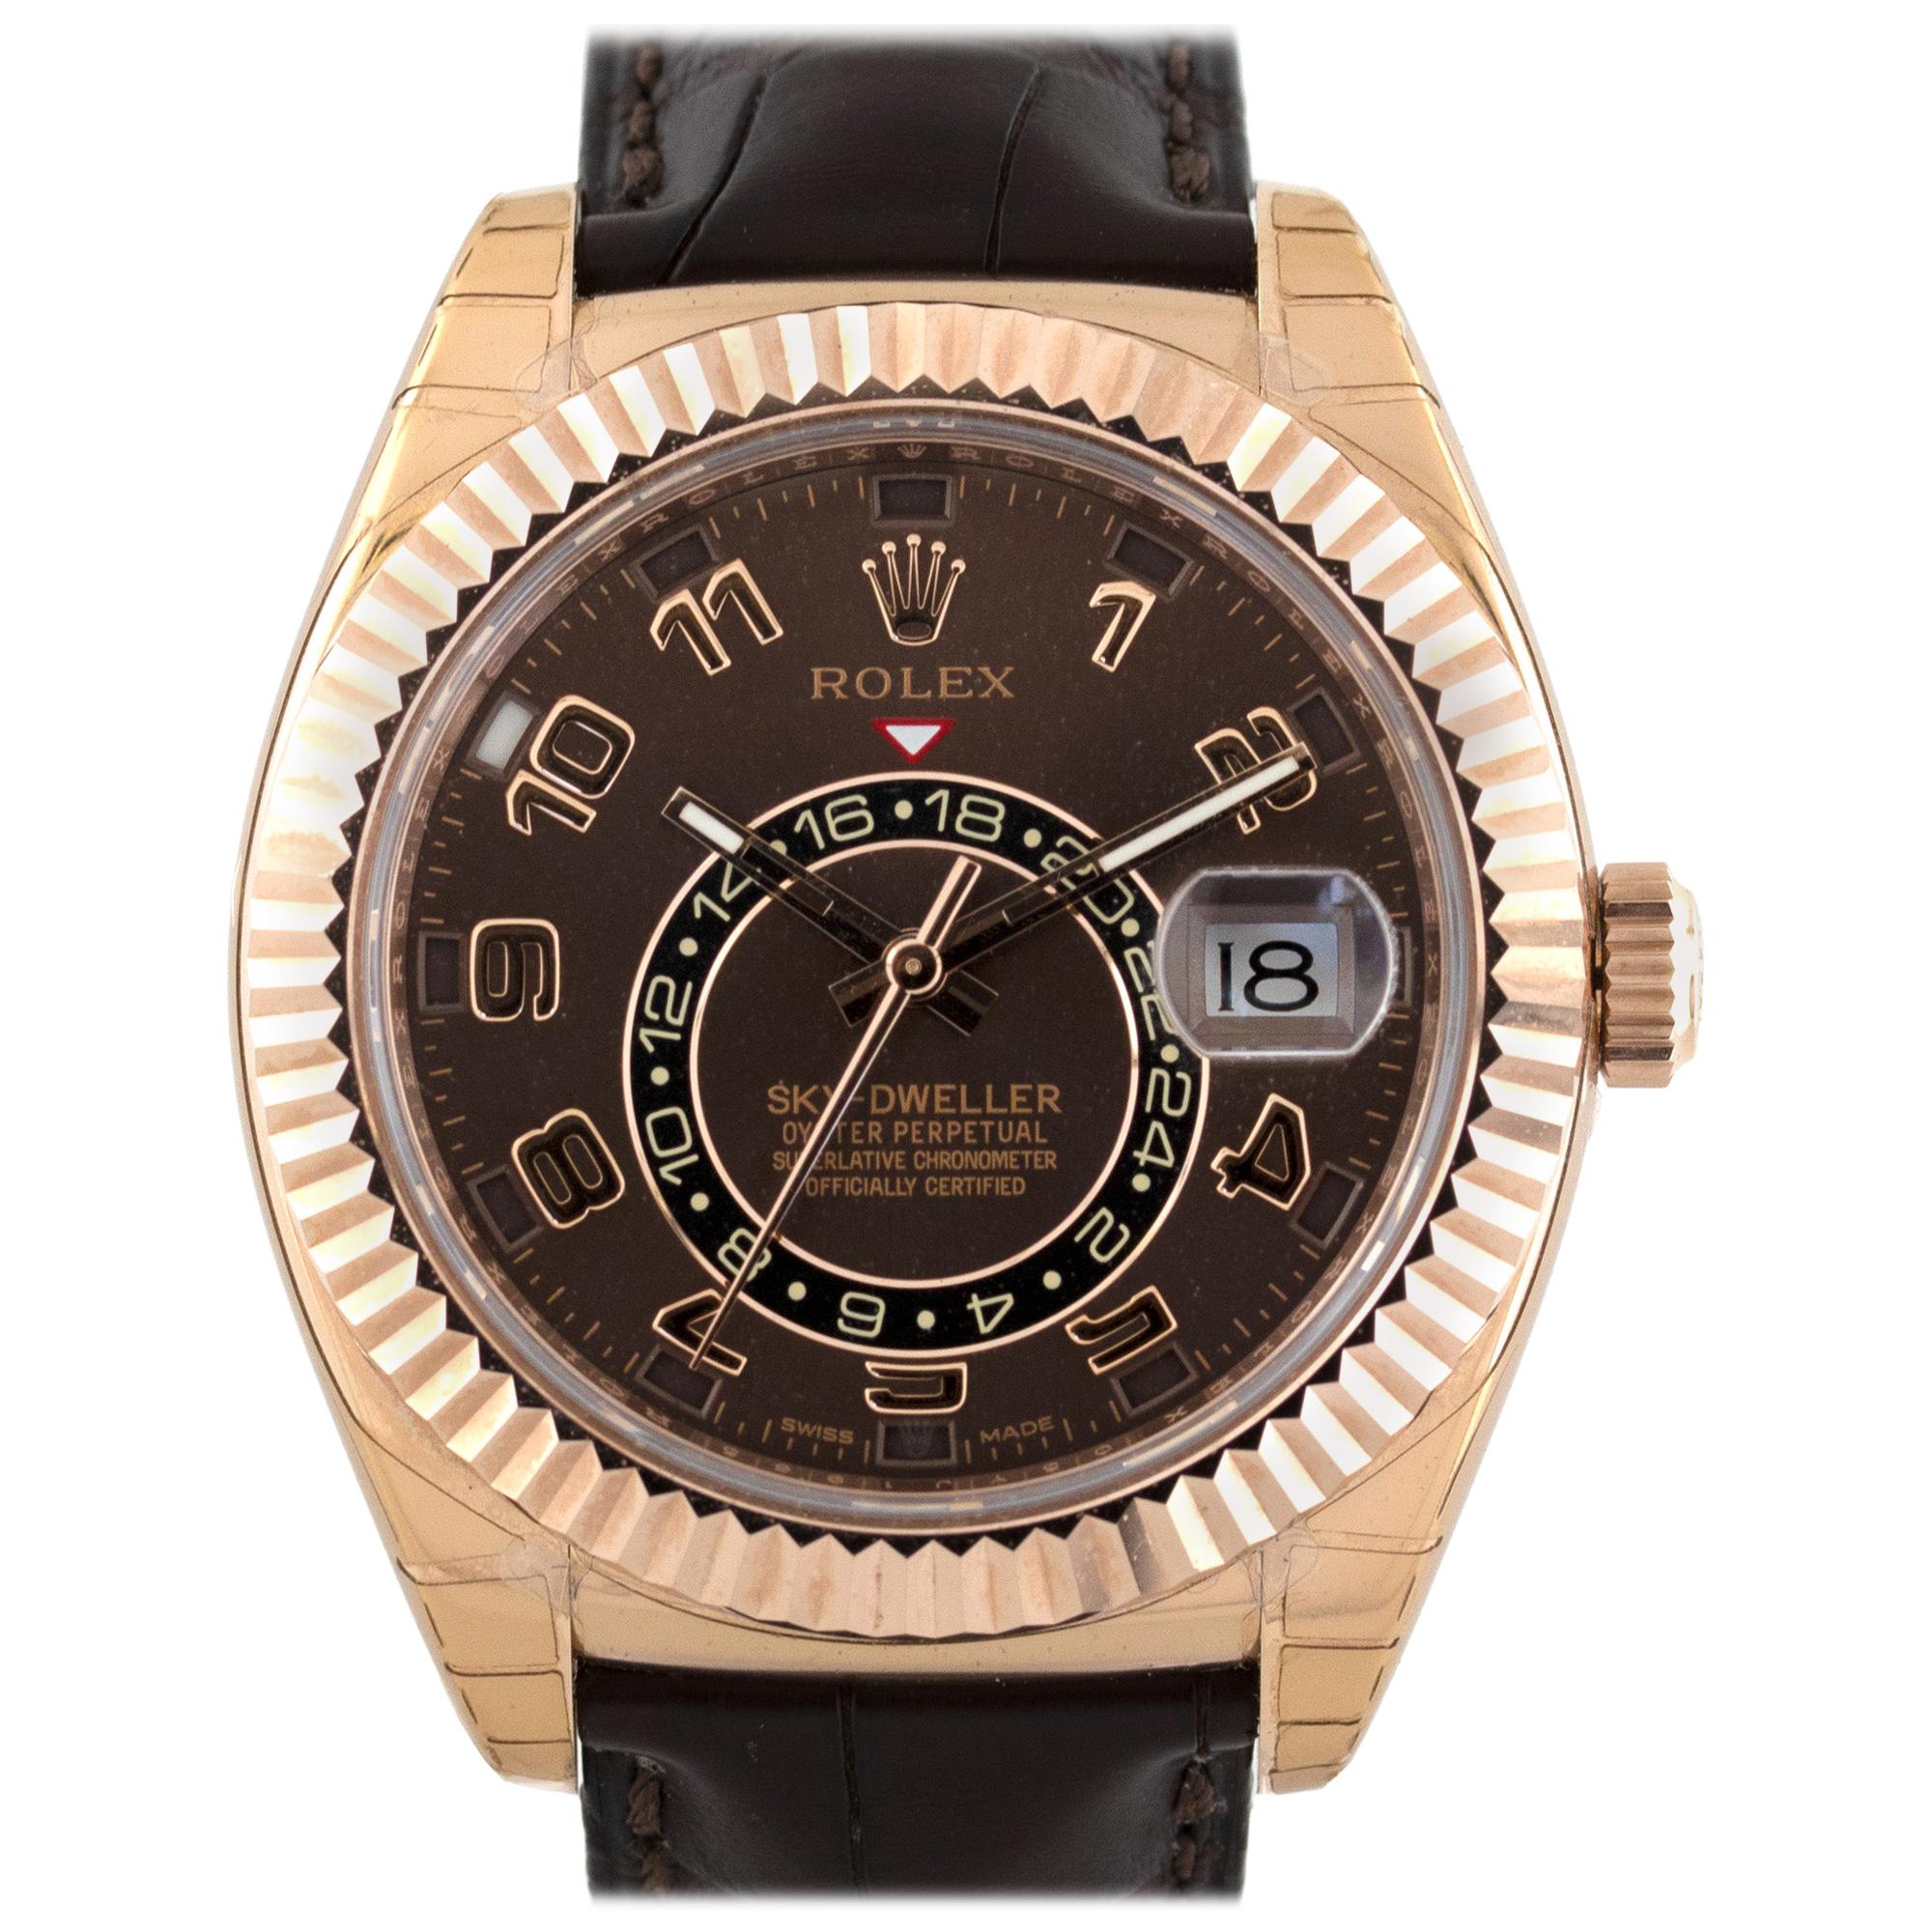 Rolex 326135 Skydweller 18 Karat Rose Gold Chocolate Dial Watch